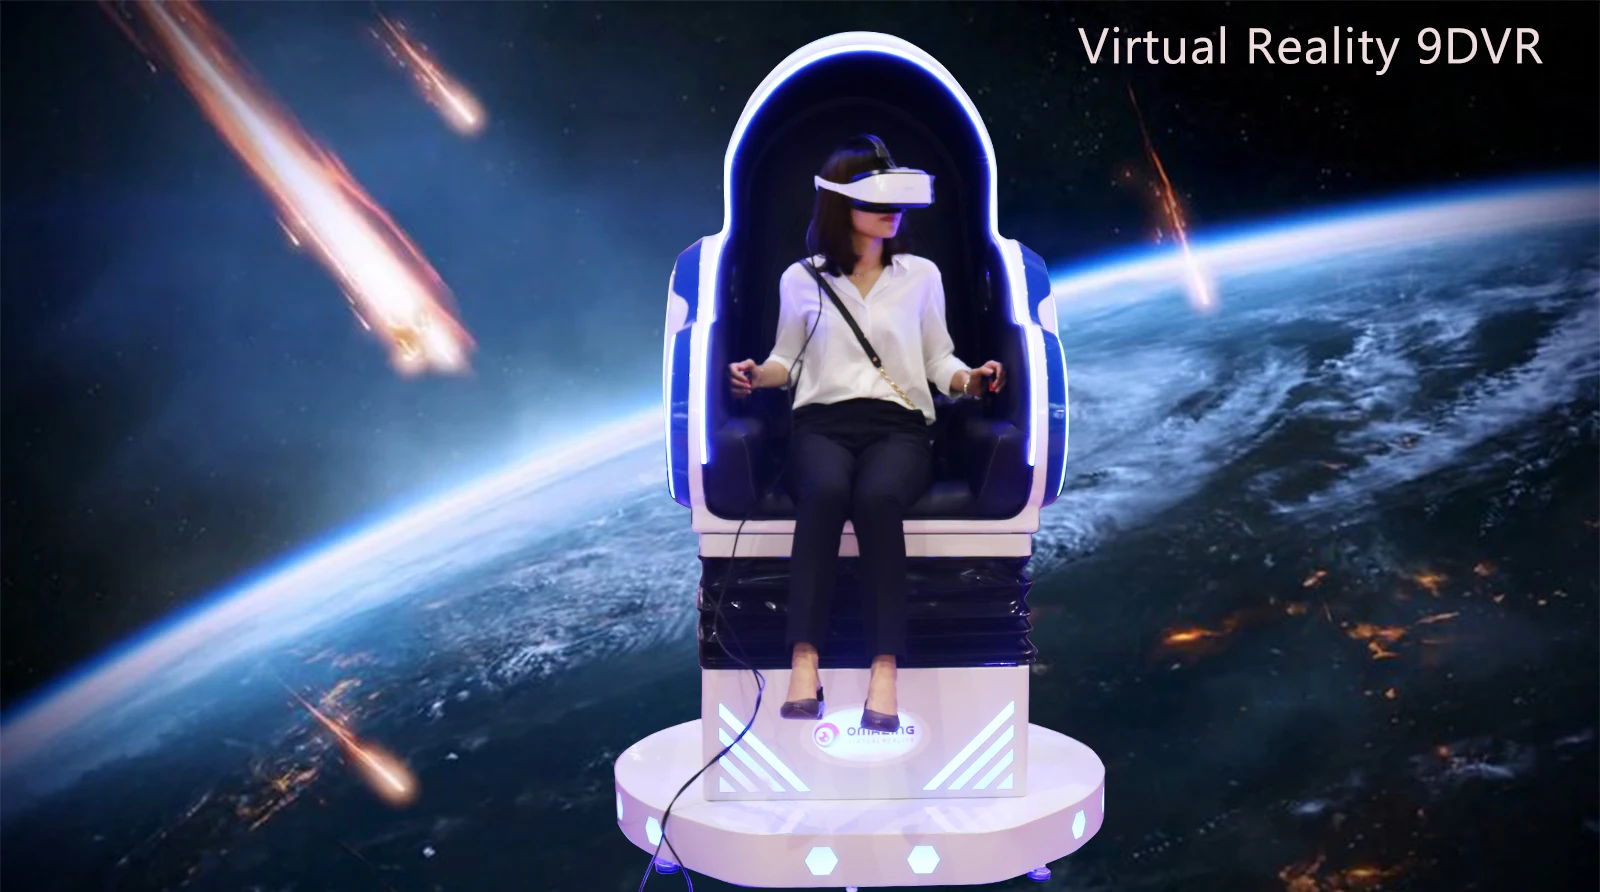 1 seat virtual reality 9d cinema vr game machine